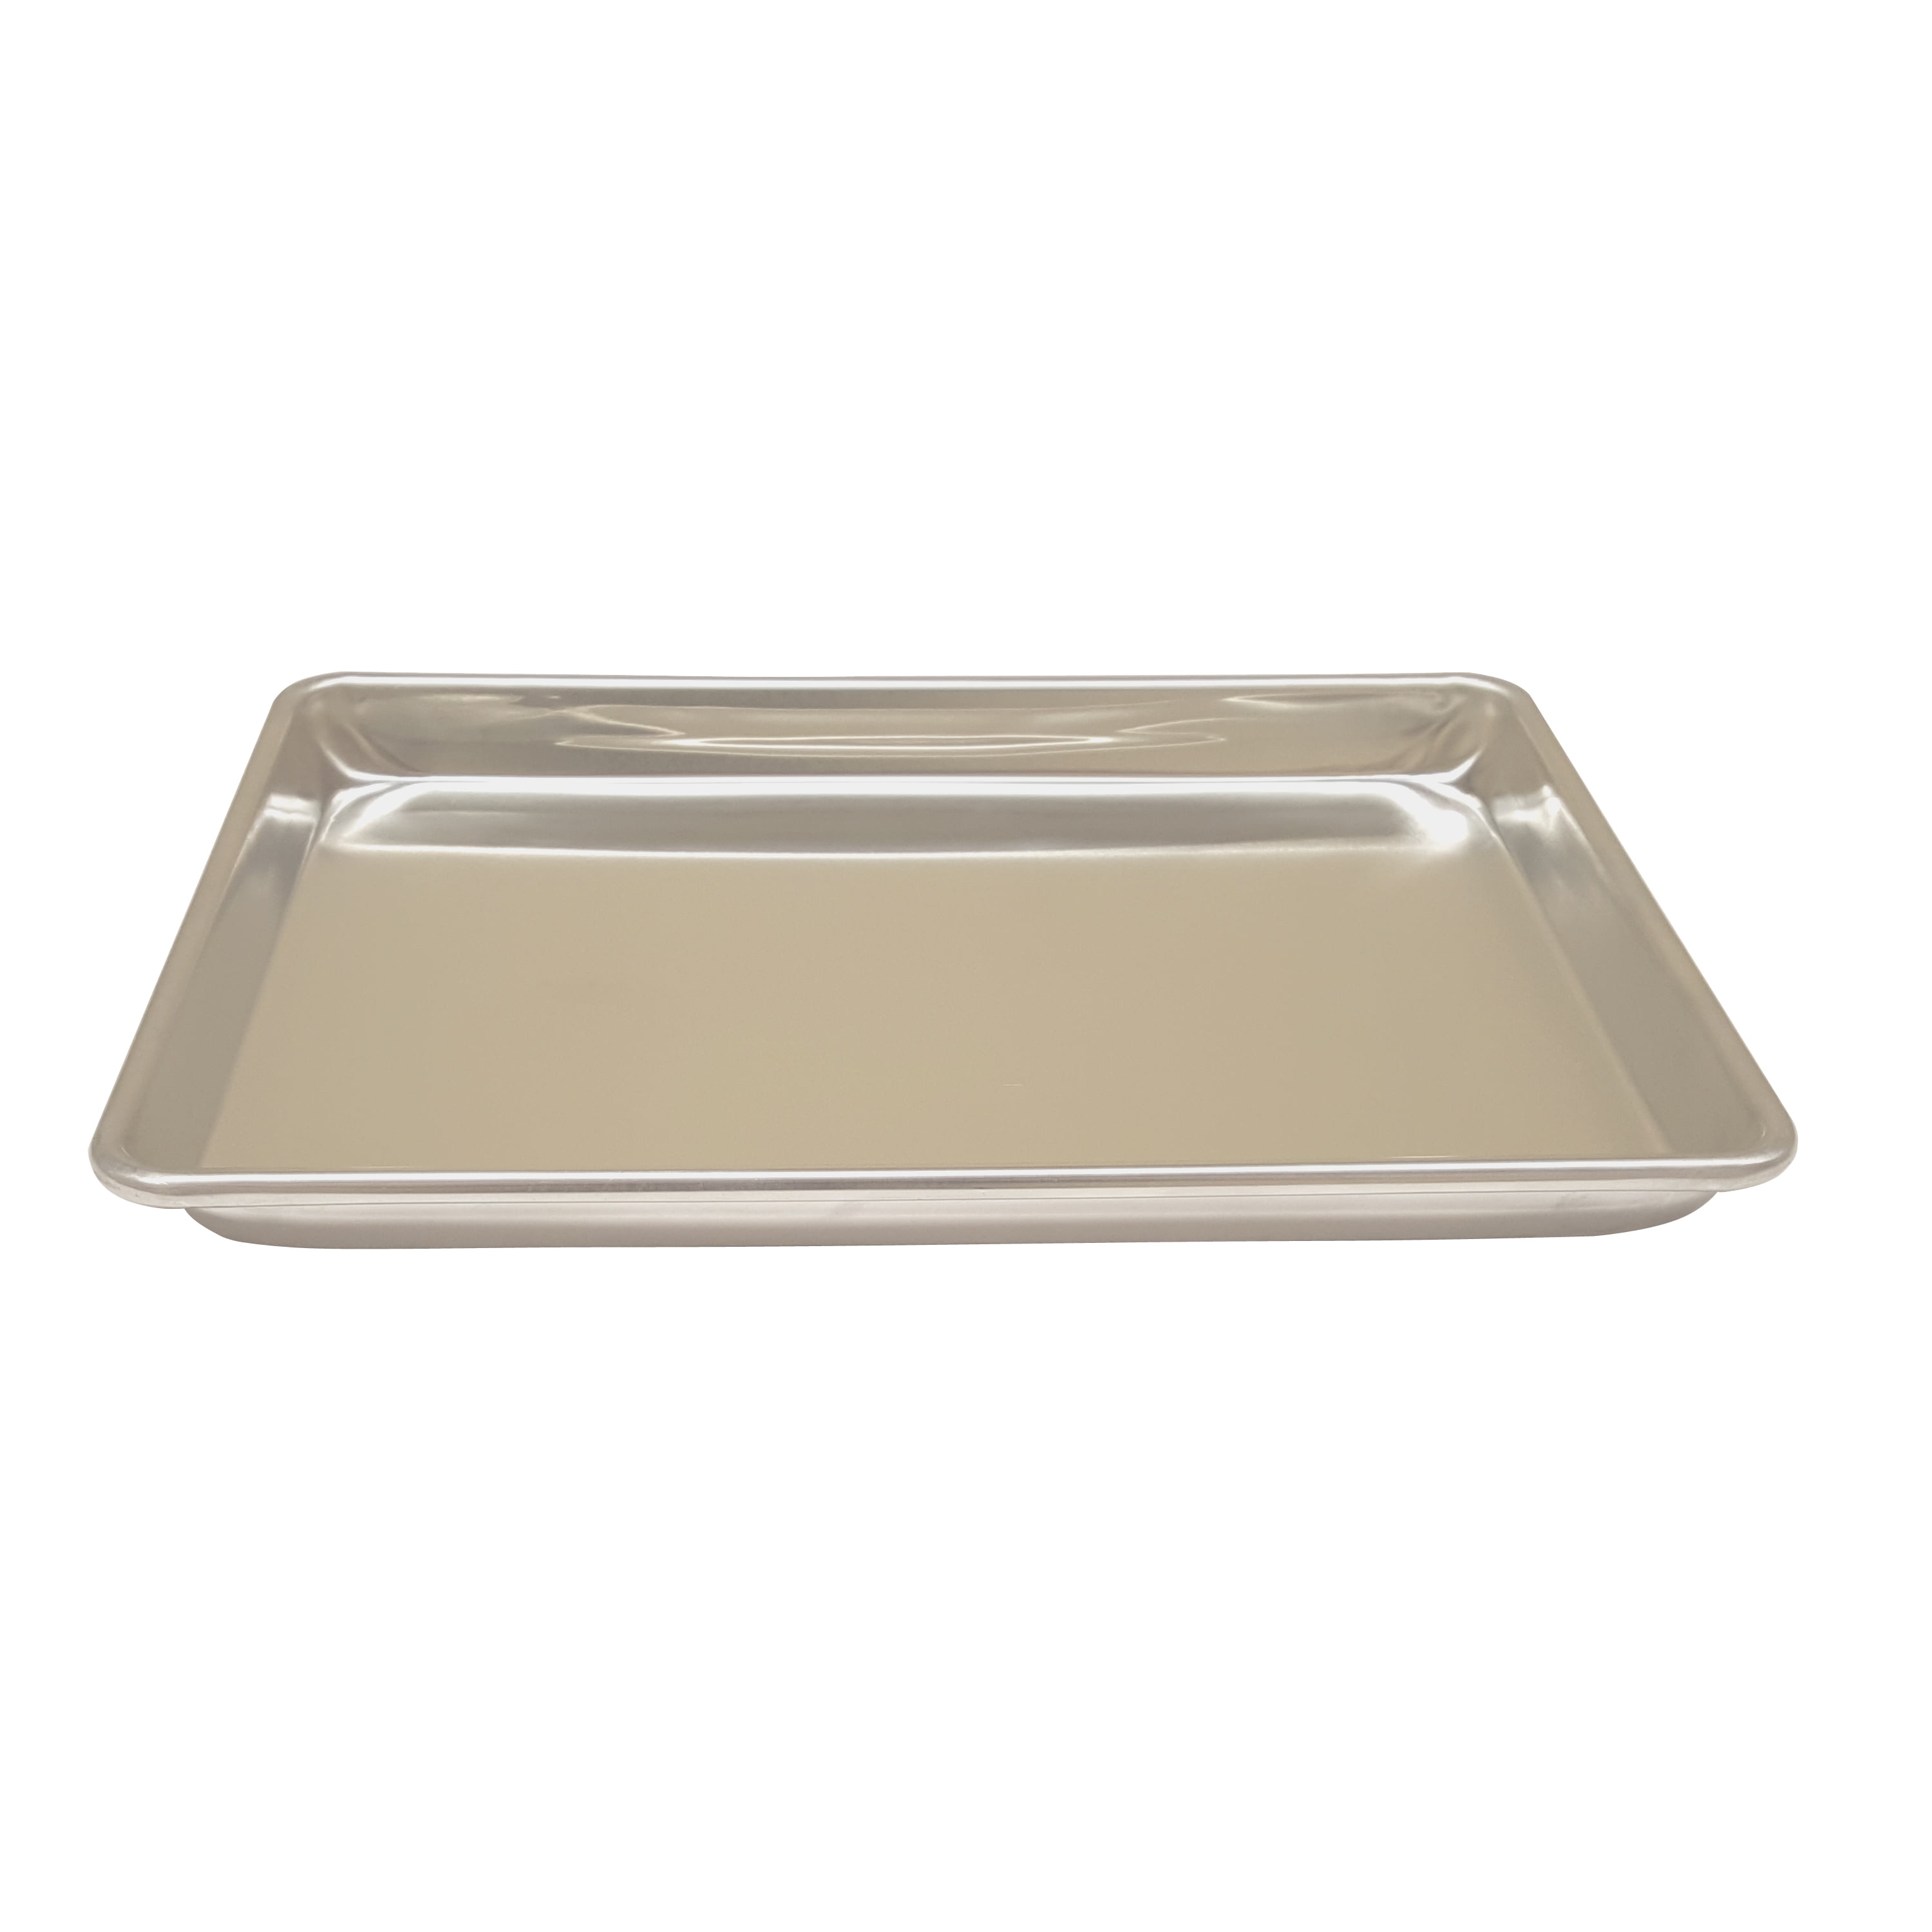  6 Pack Full Size 18 x 26 inch Aluminum Baking Sheet Pan  Commercial Pan for Oven Freezer Bakery Hotel Restaurant: Home & Kitchen